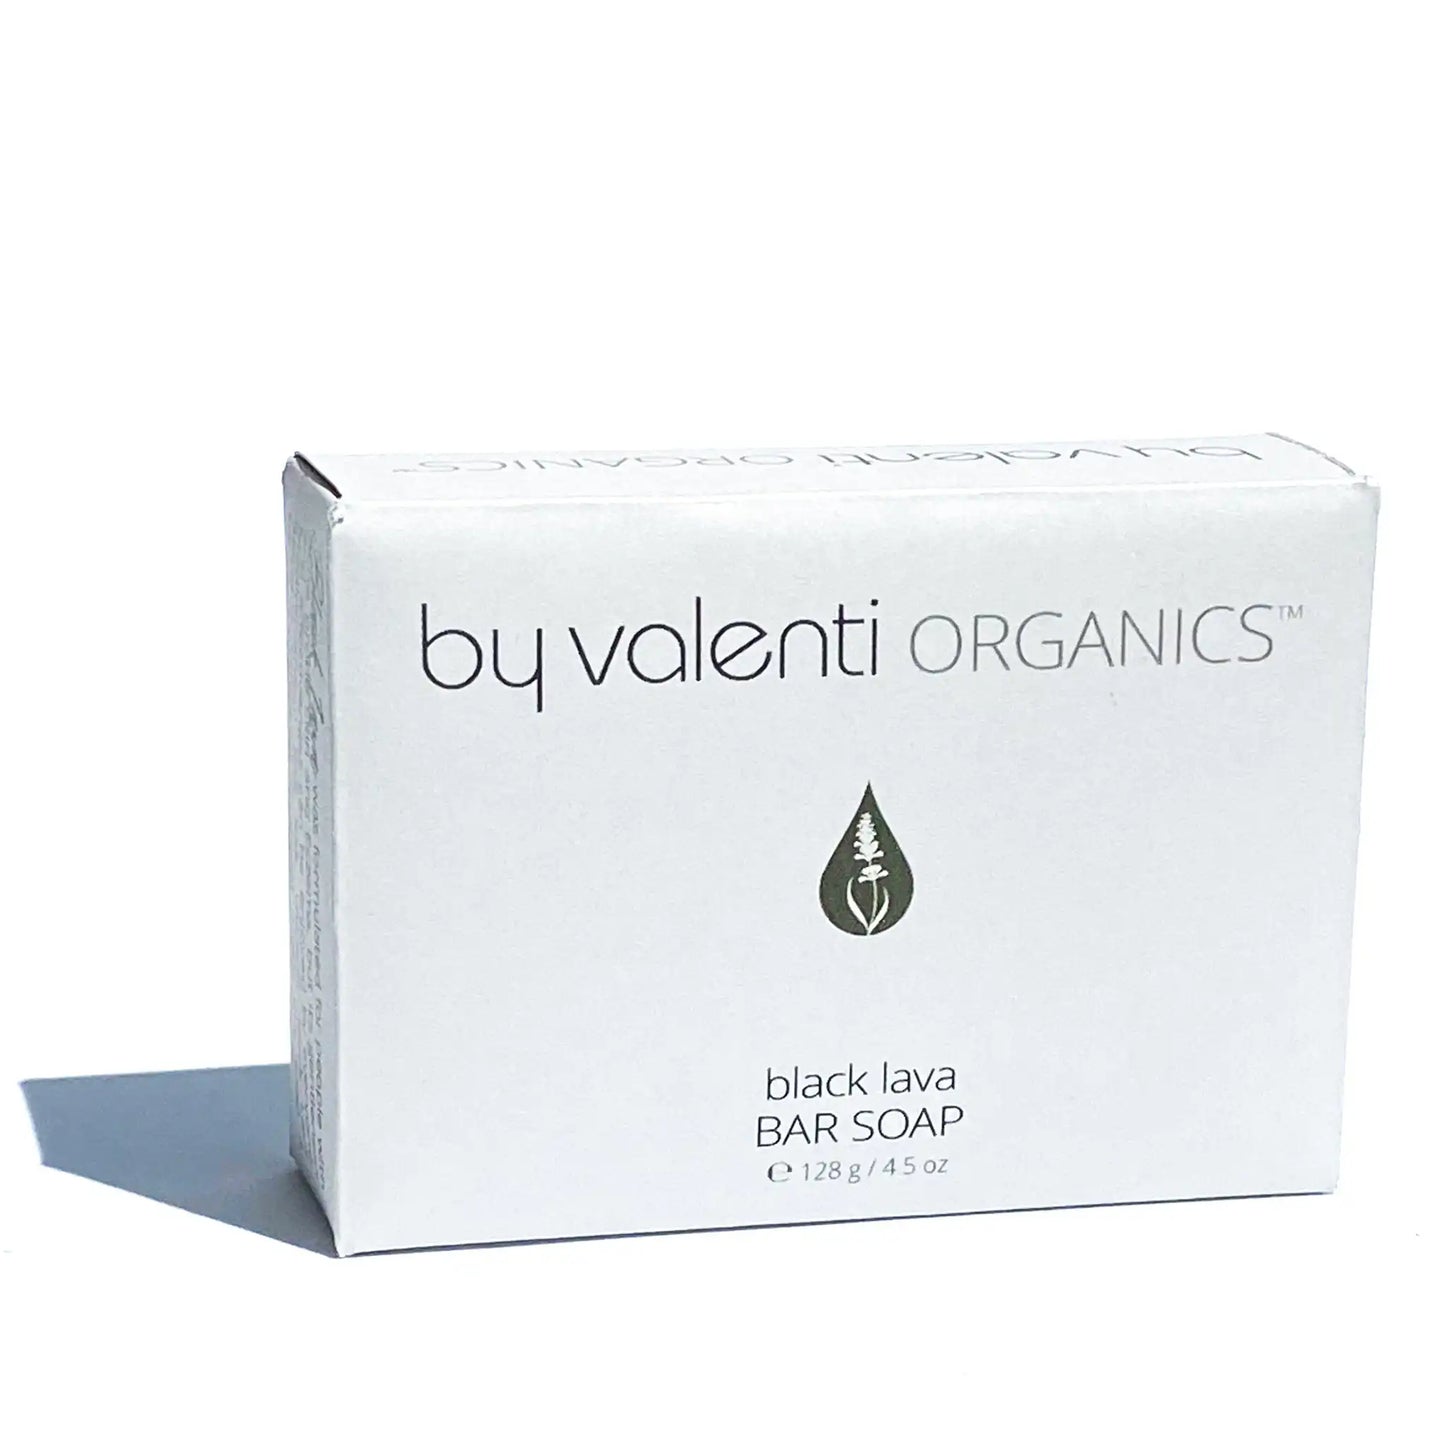 Black Lava Bar Soap Black Clay Bar Soap Charcoal By Valenti Organics Clean Natural Skin Care